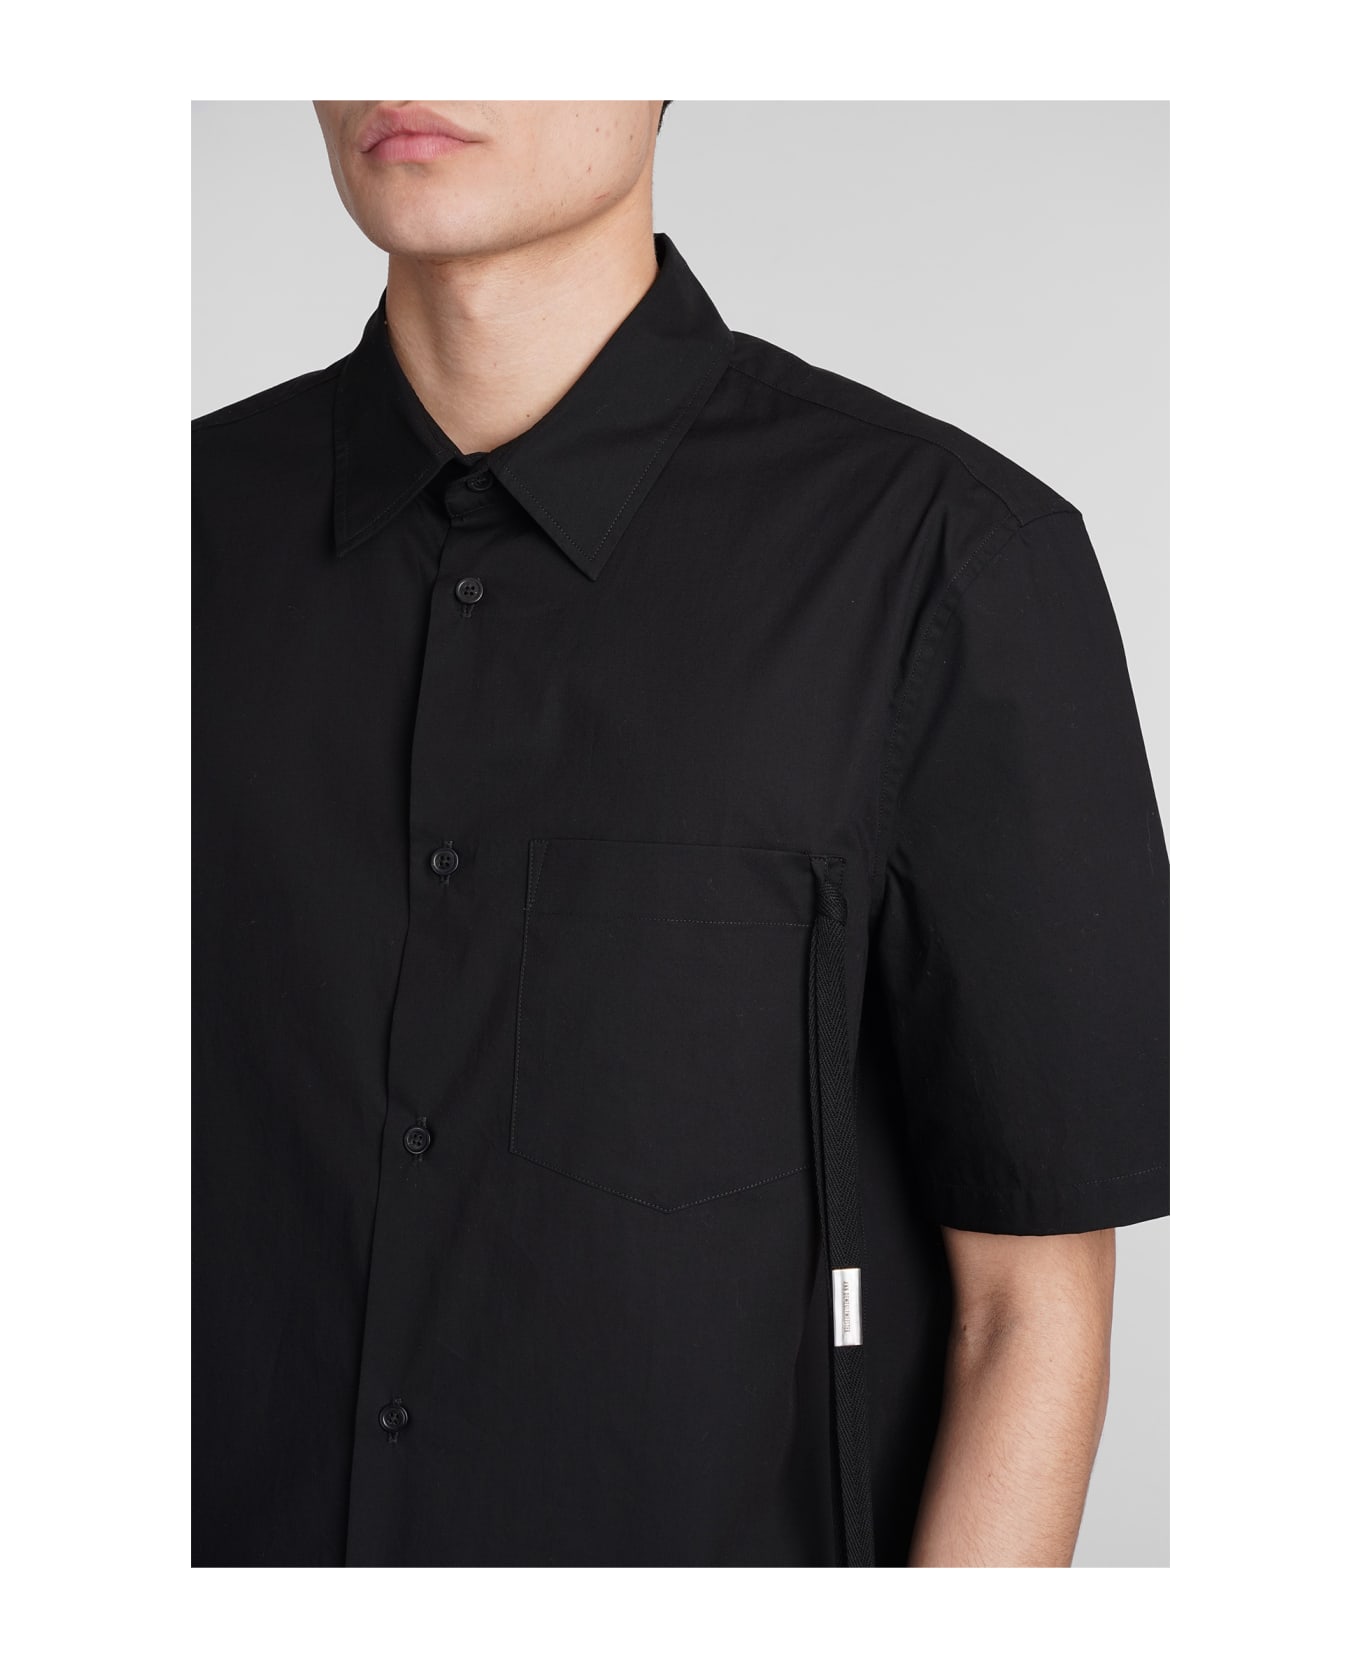 Ann Demeulemeester Shirt In Black Cotton - black